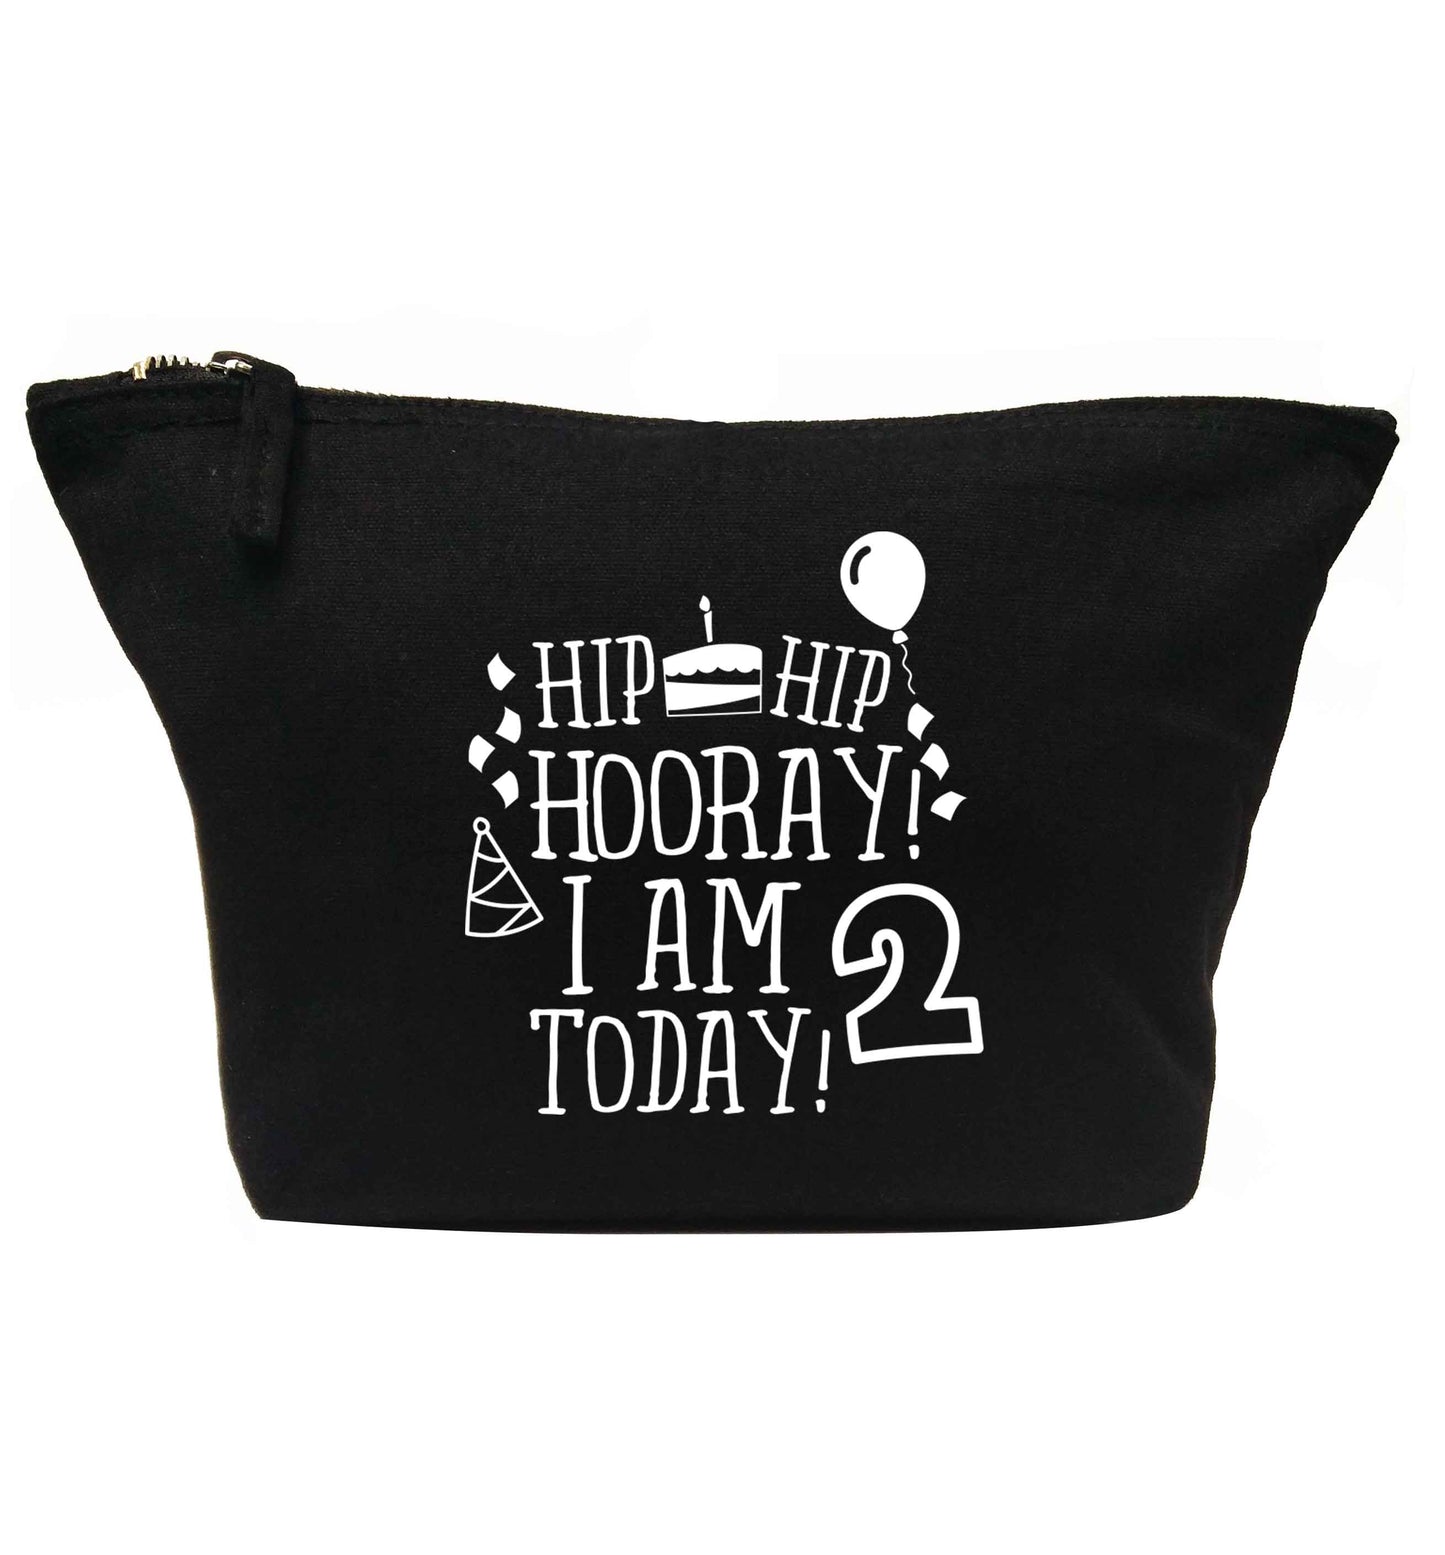 Hip Hip Hooray I'm two today! | Makeup / wash bag